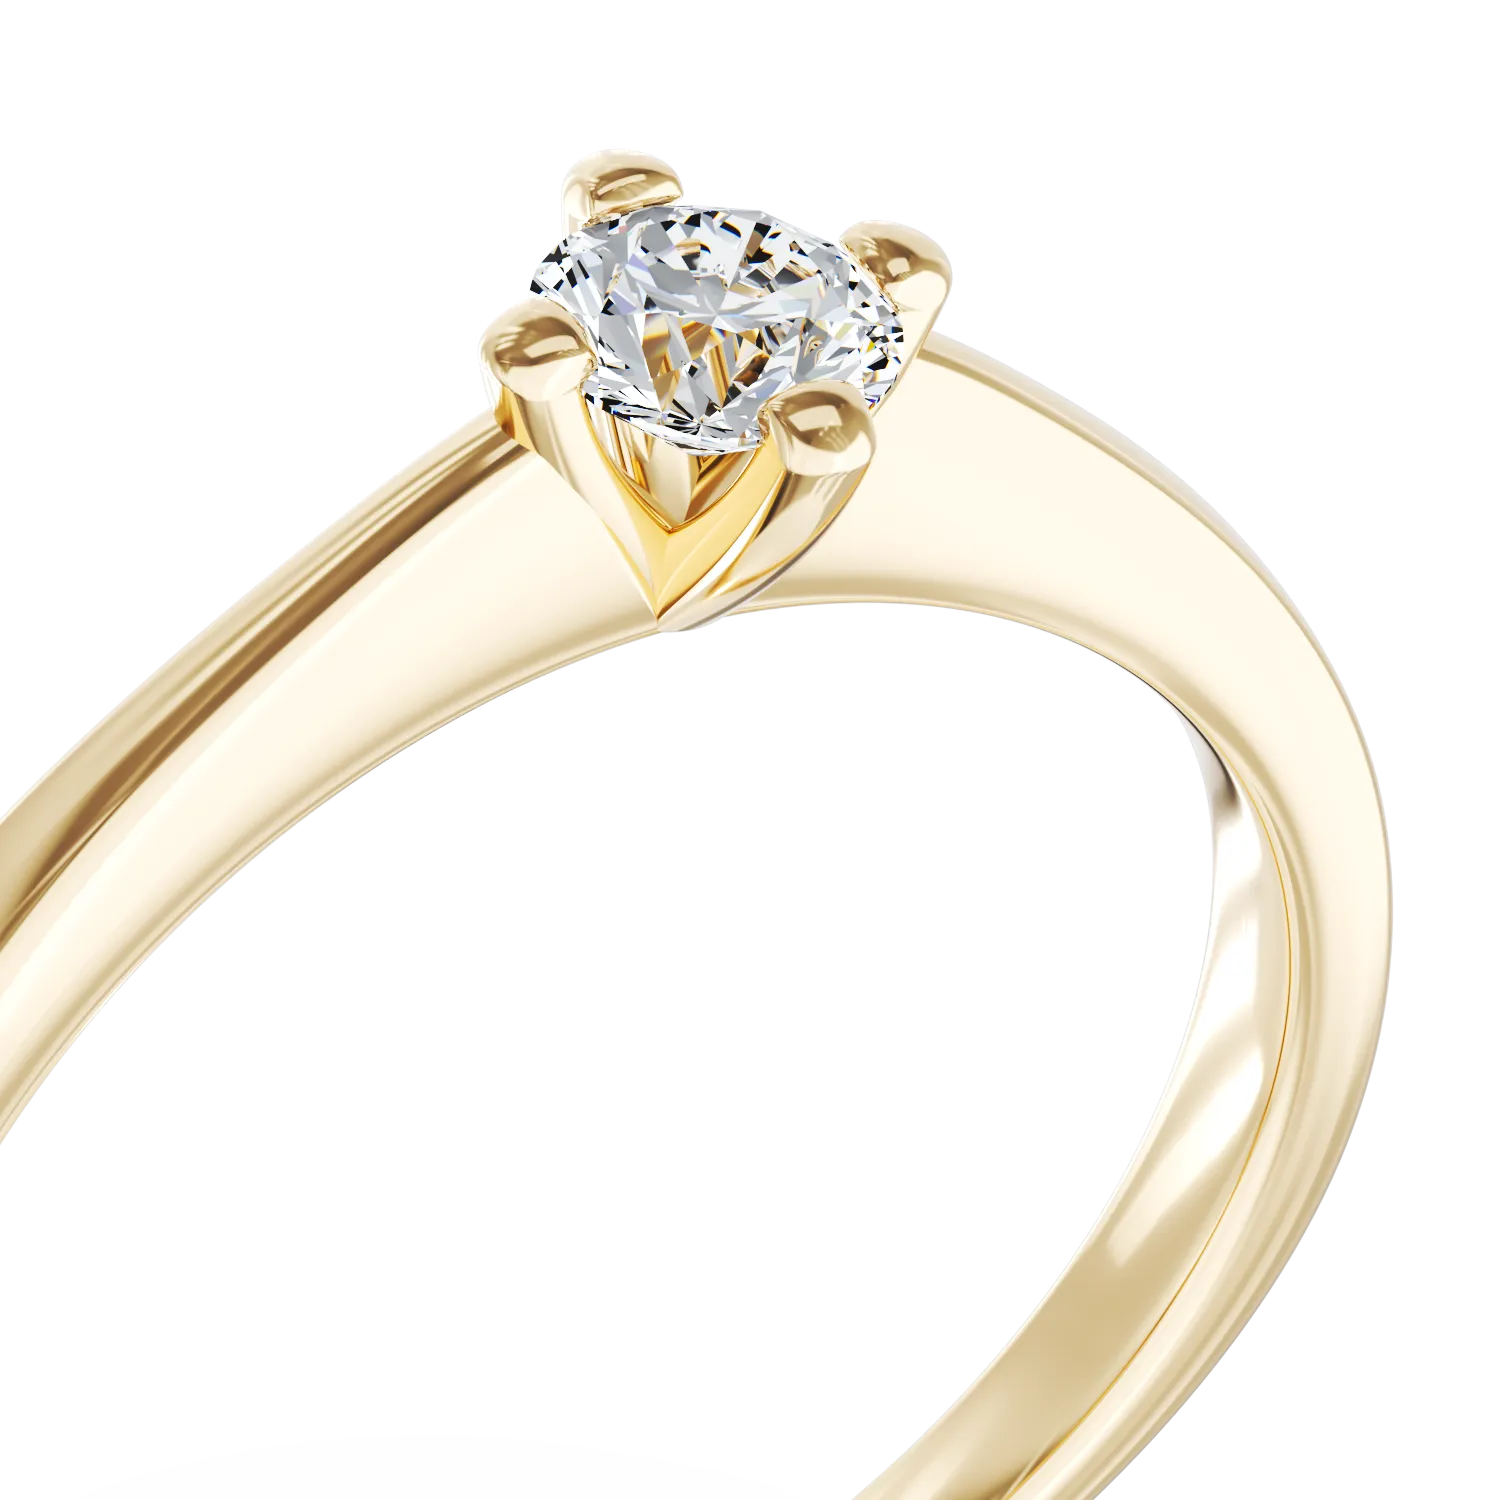 Inel de logodna din aur galben de 18K cu un diamant solitaire de 0.2ct